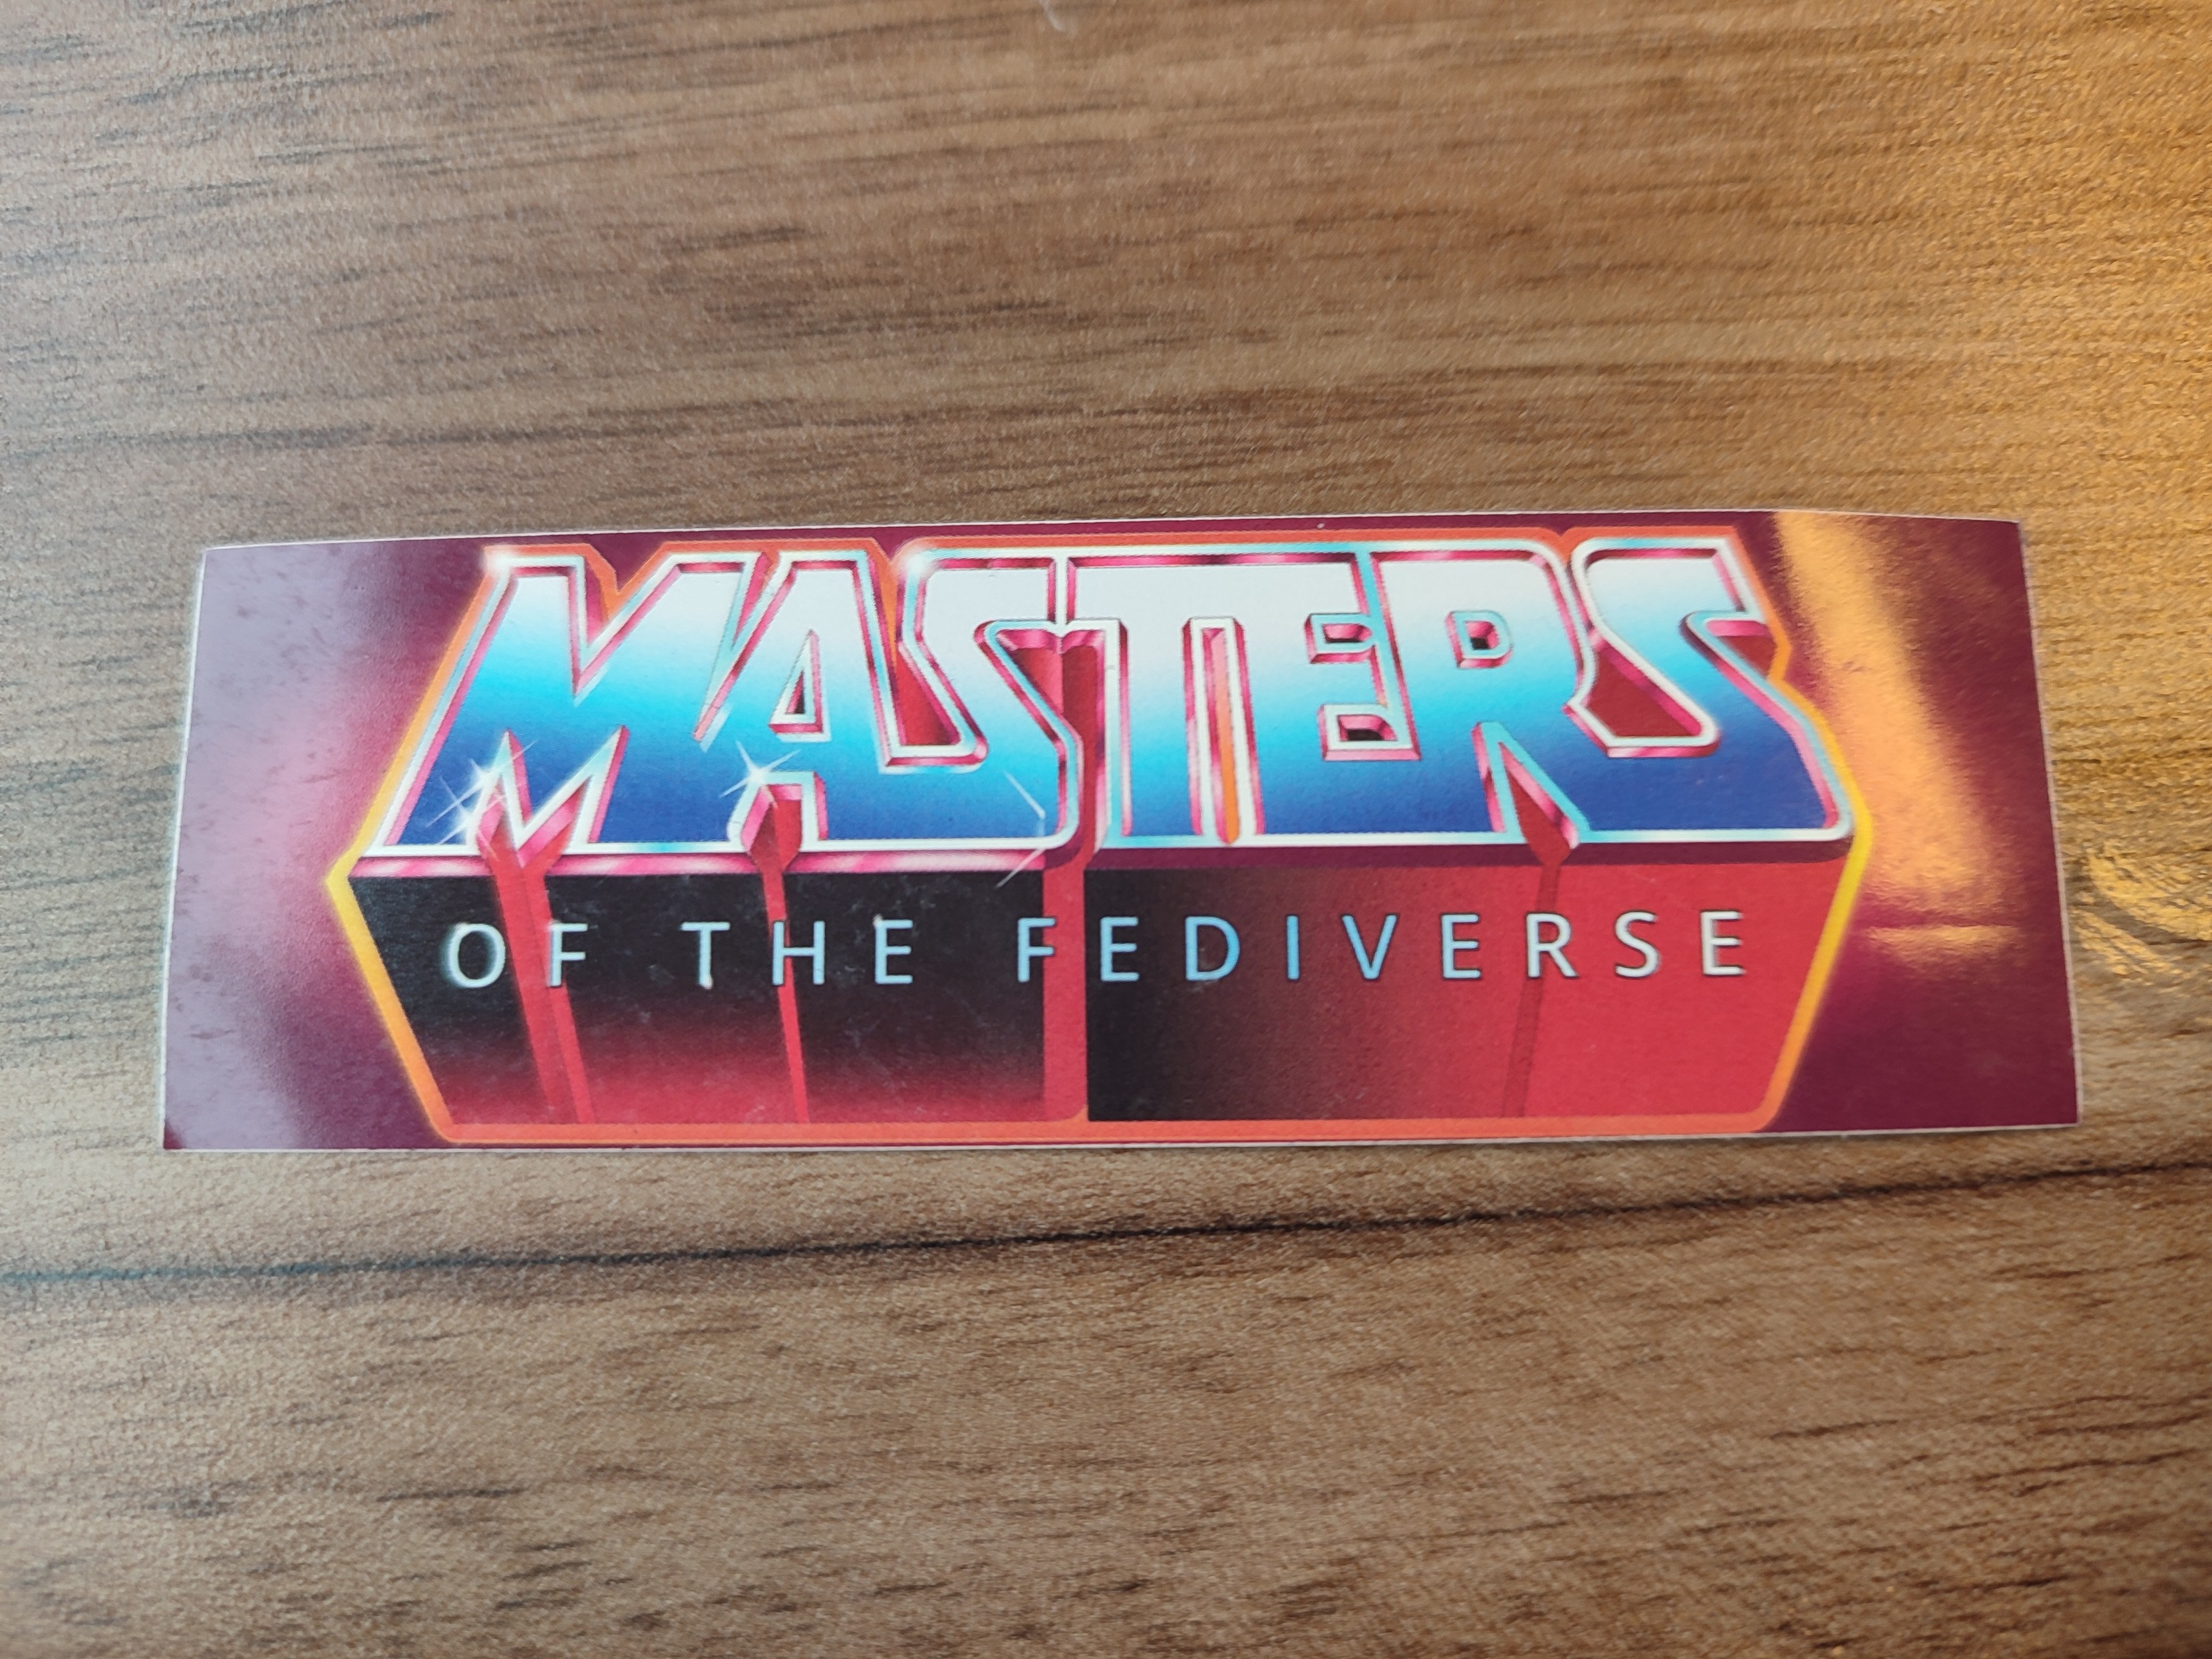 Sticker mit der Aufschrift "Masters of the Fediverse" im "Masters of the Universe" Style.